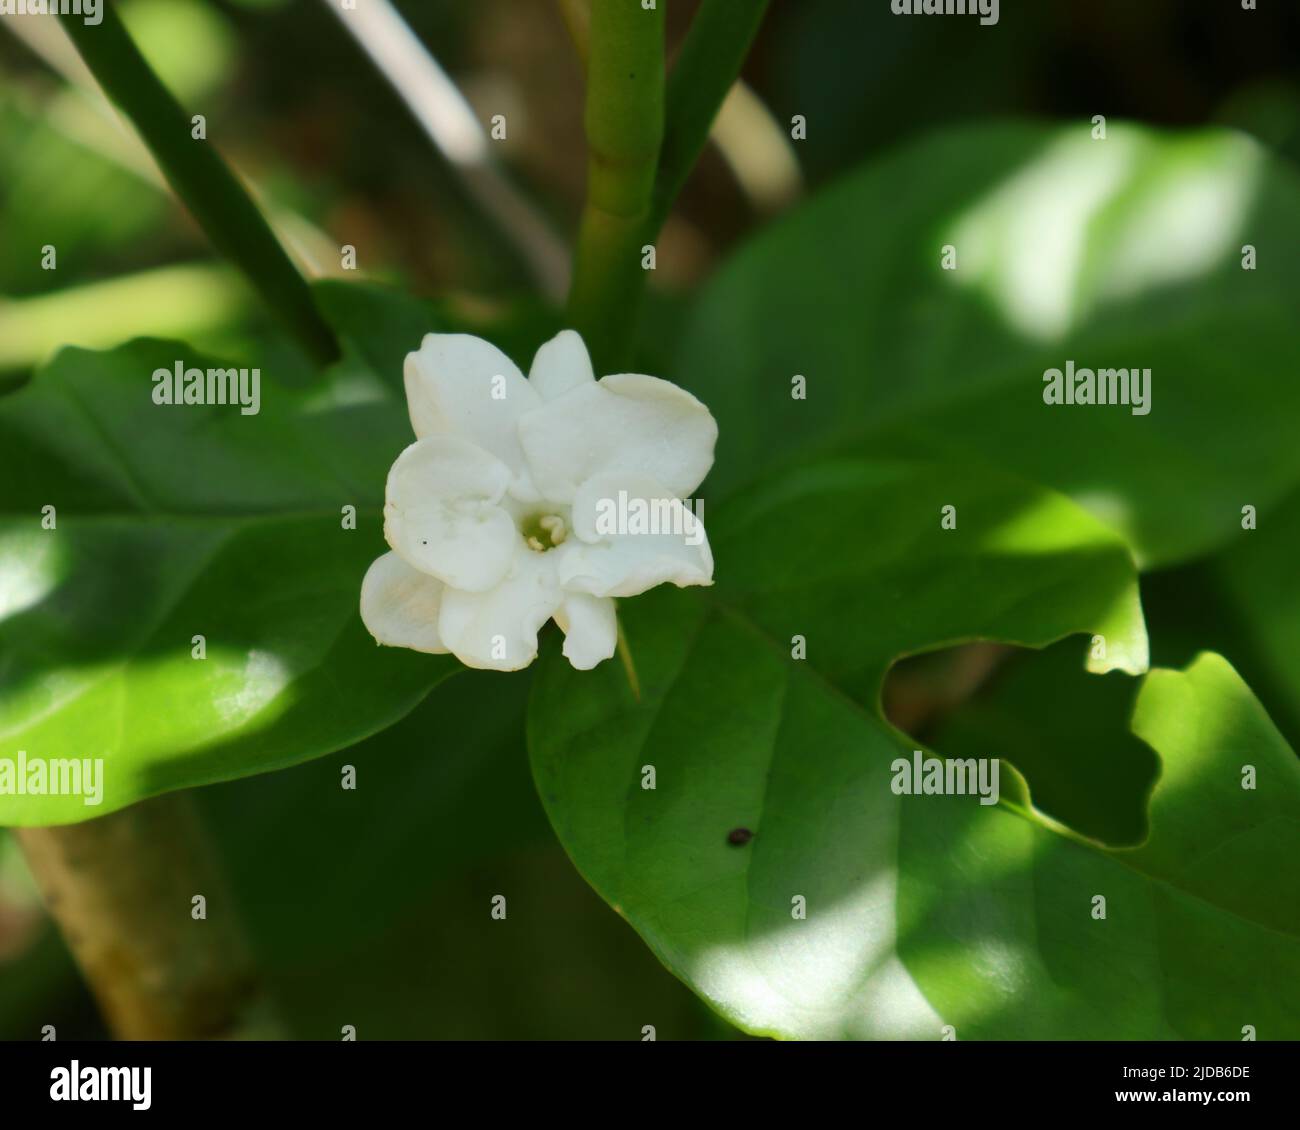 A fragrant flower of Jasmine variety of Arabian jasmine or Sambac jasmine Stock Photo